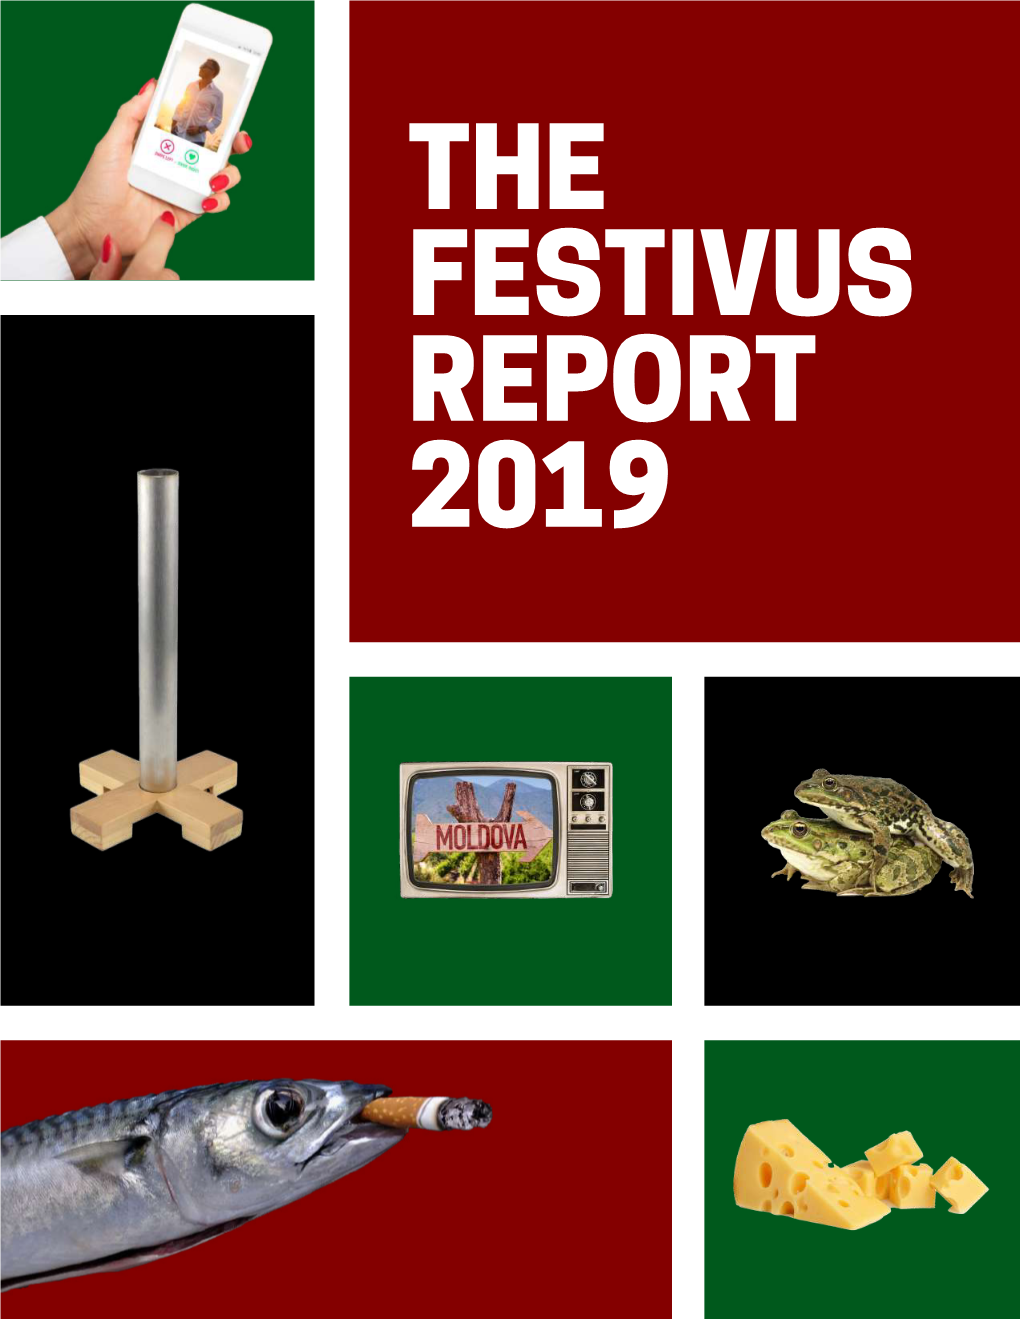 The Festivus Report 2019